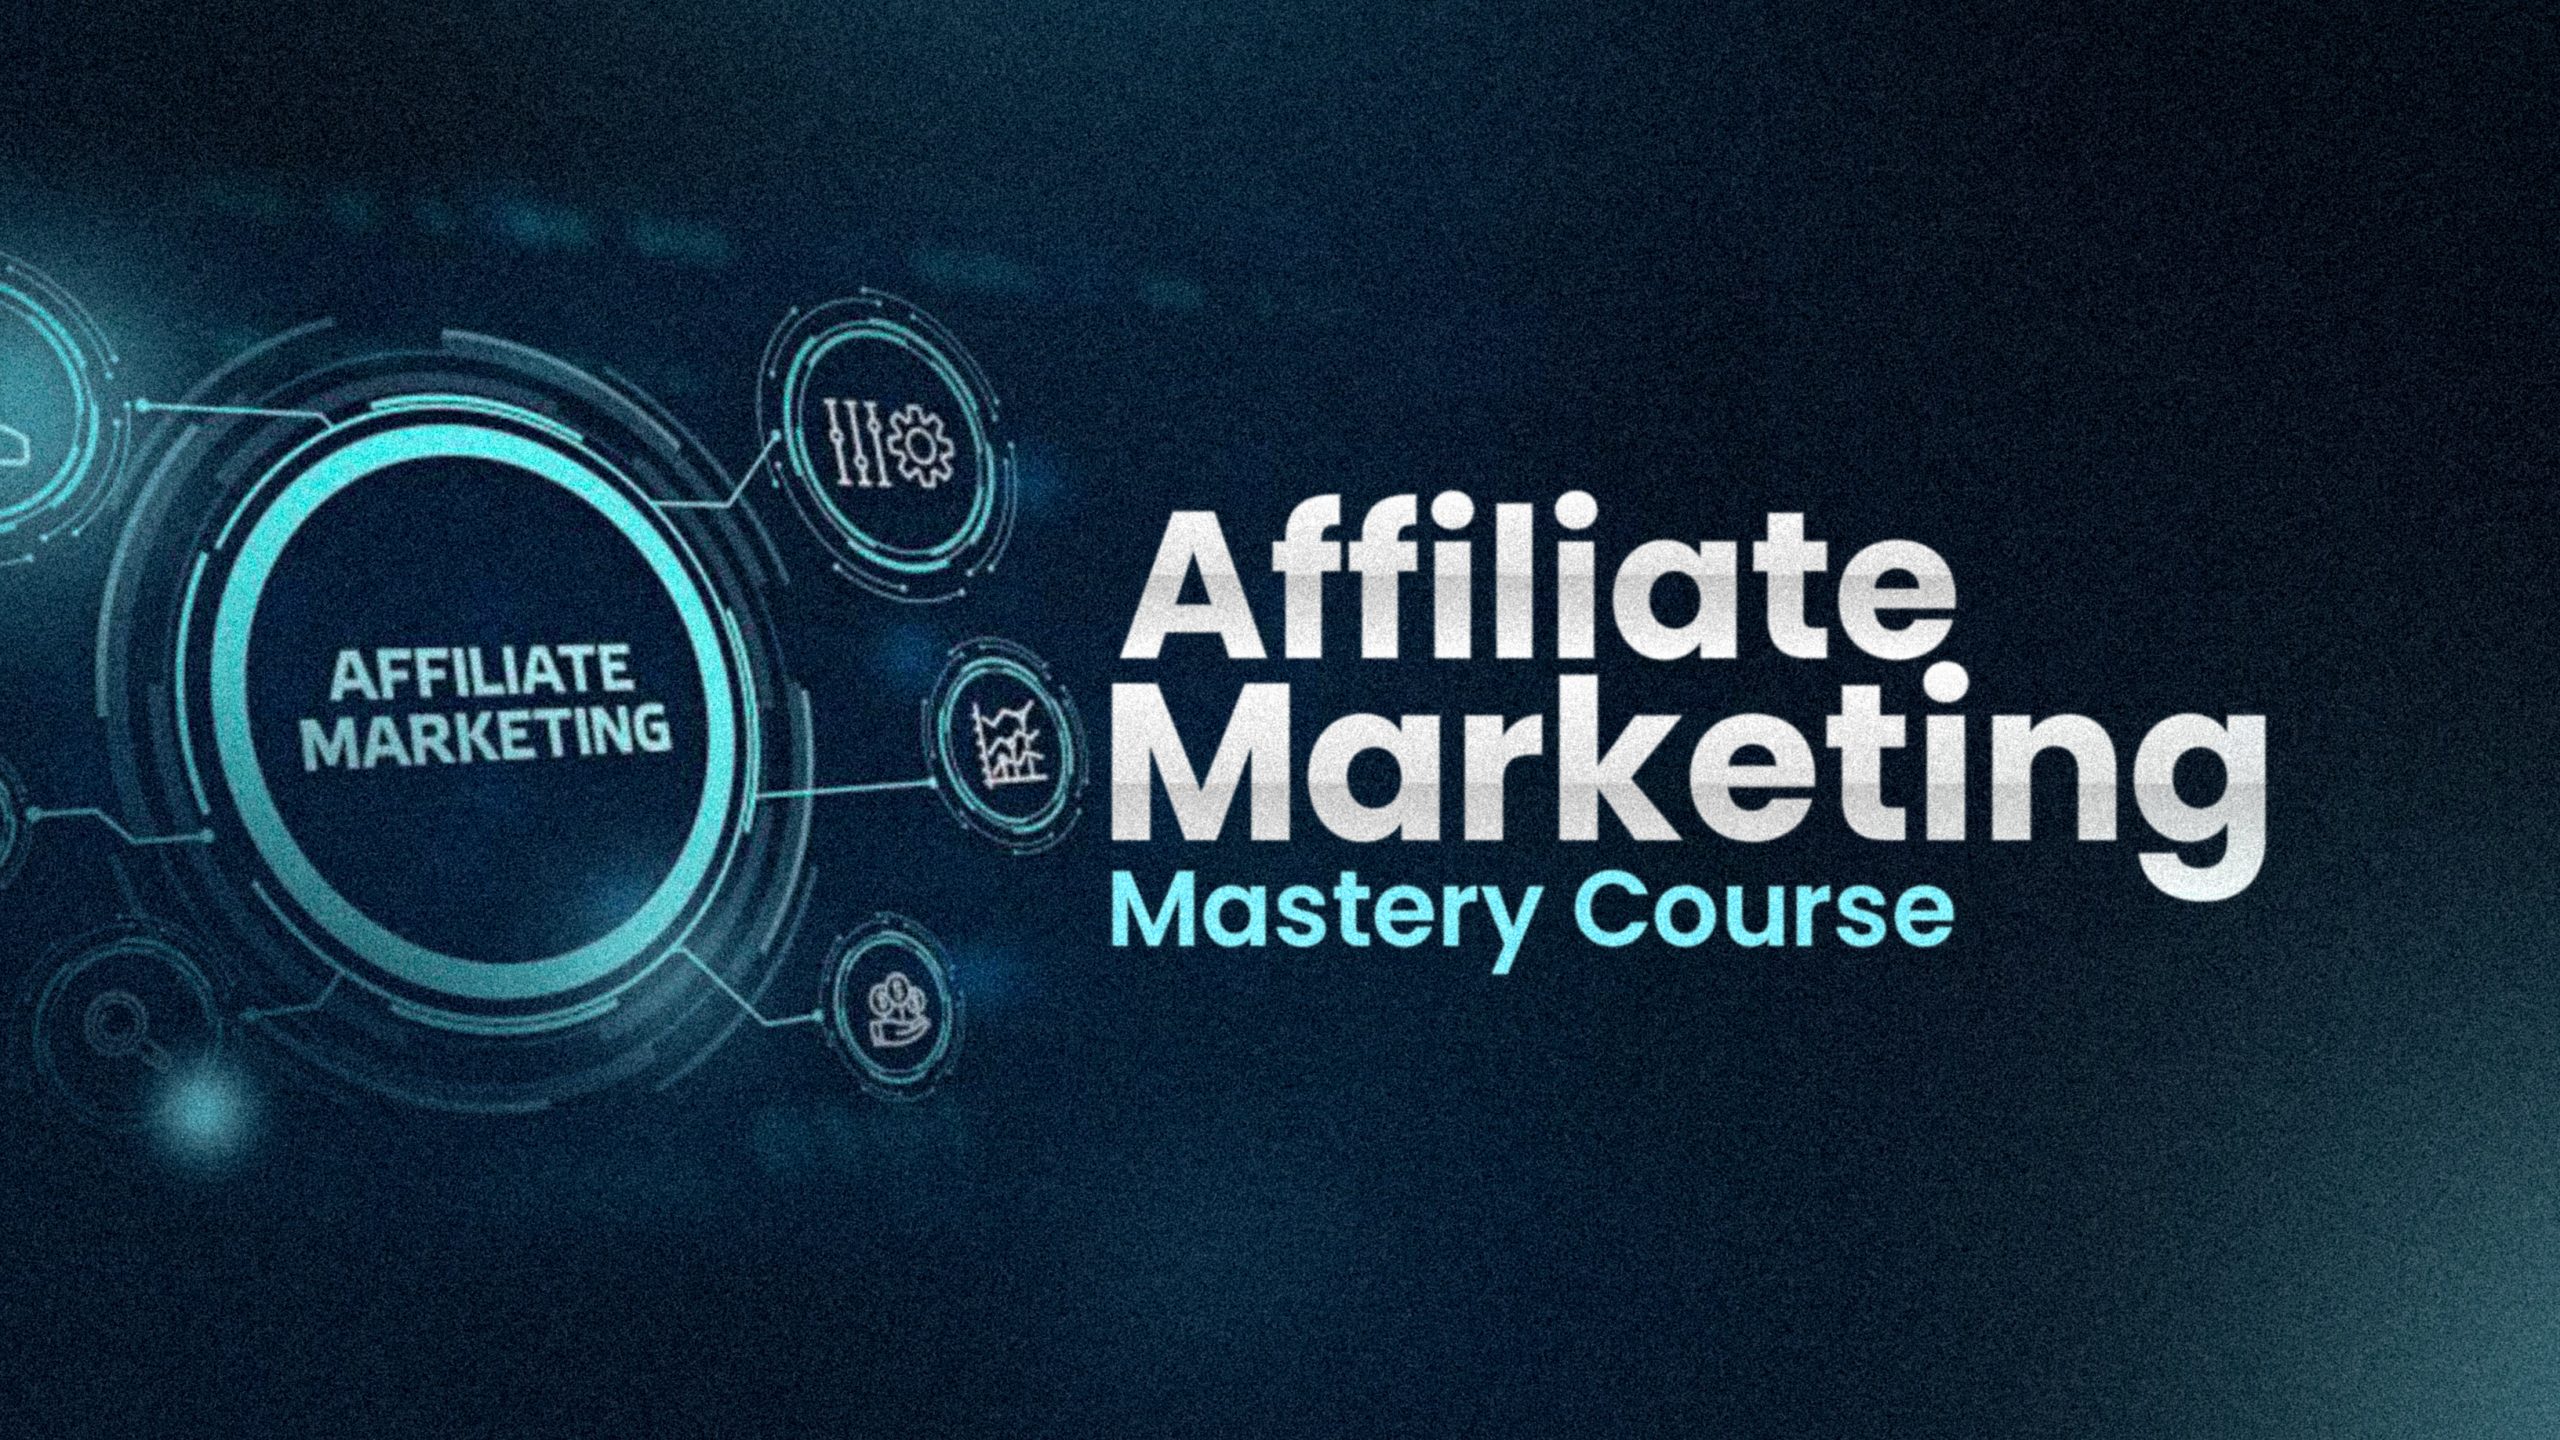 Affiliate Marketing Mastery Course